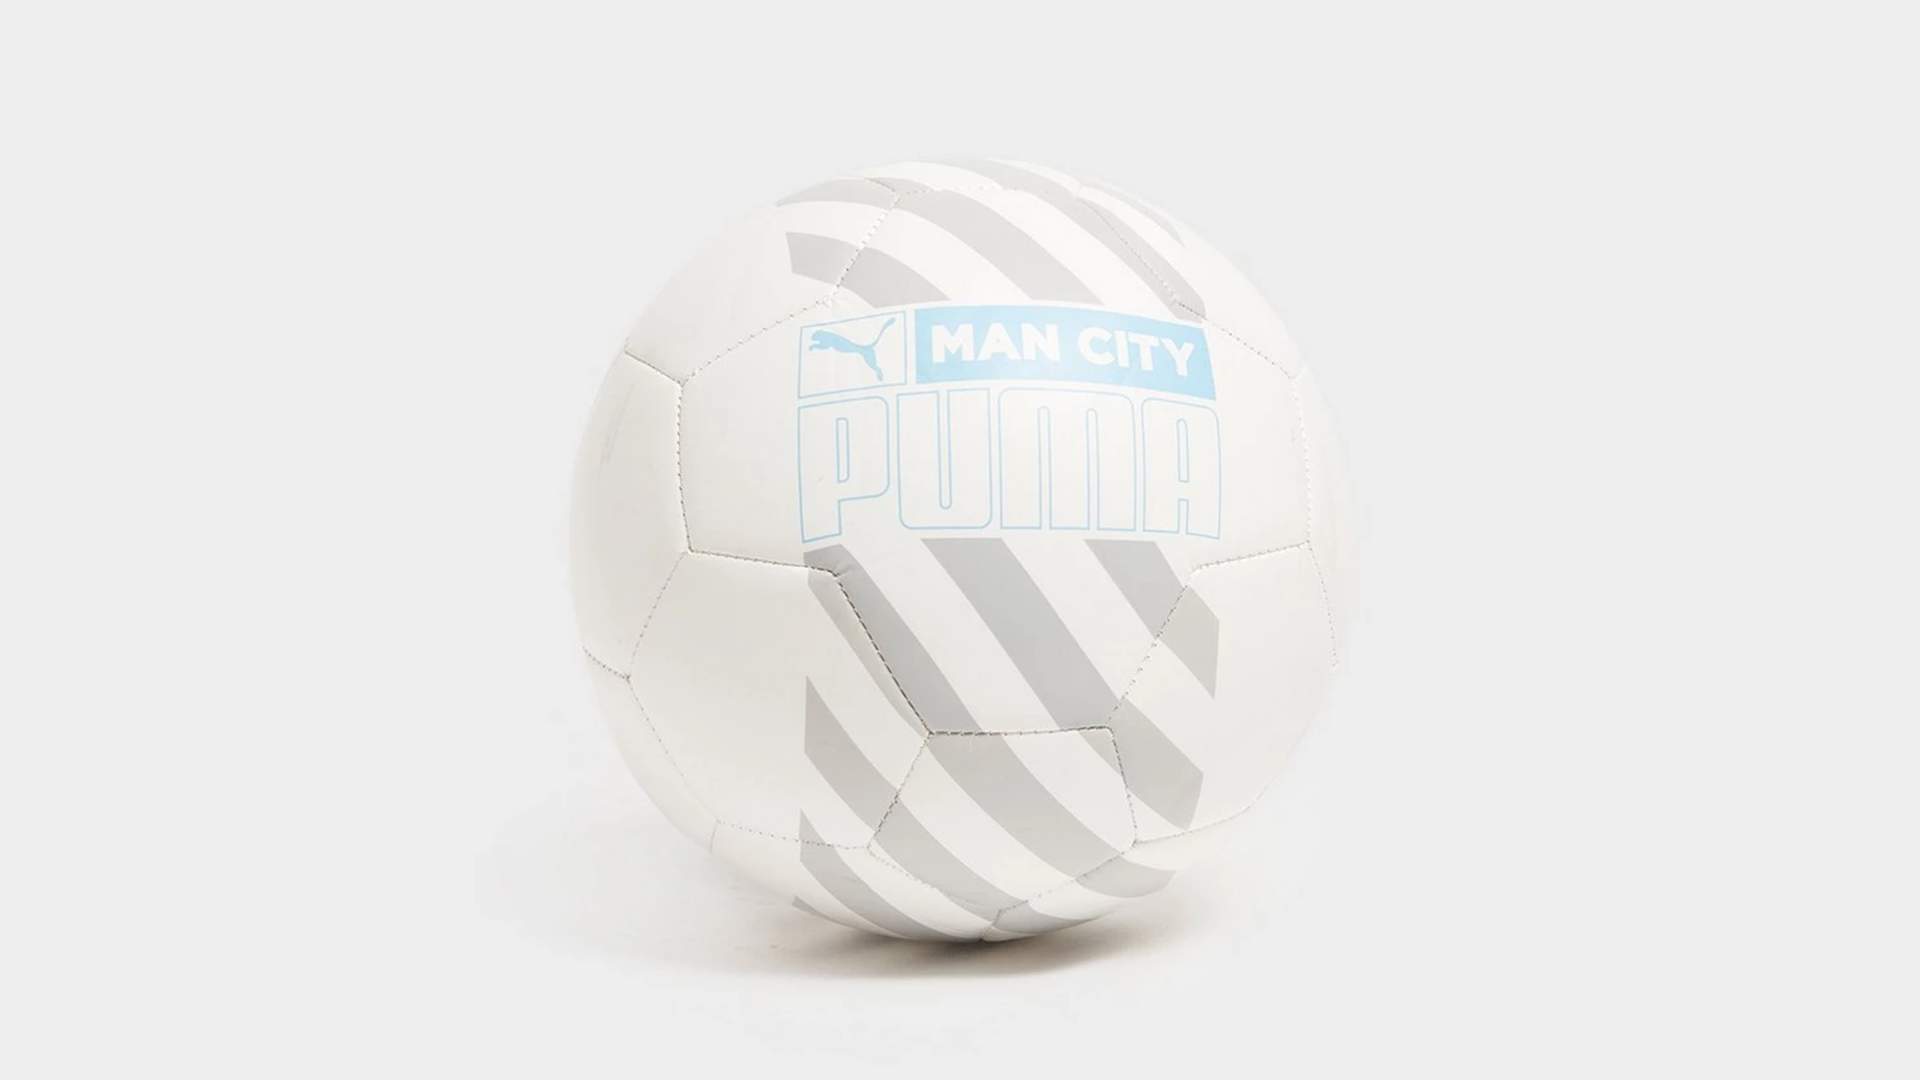 MANCHESTER CITY FOOTBALL SIZE 5 XMAS GIFT BIRTHDAY PRESENT Man City PREMIERSHIP 